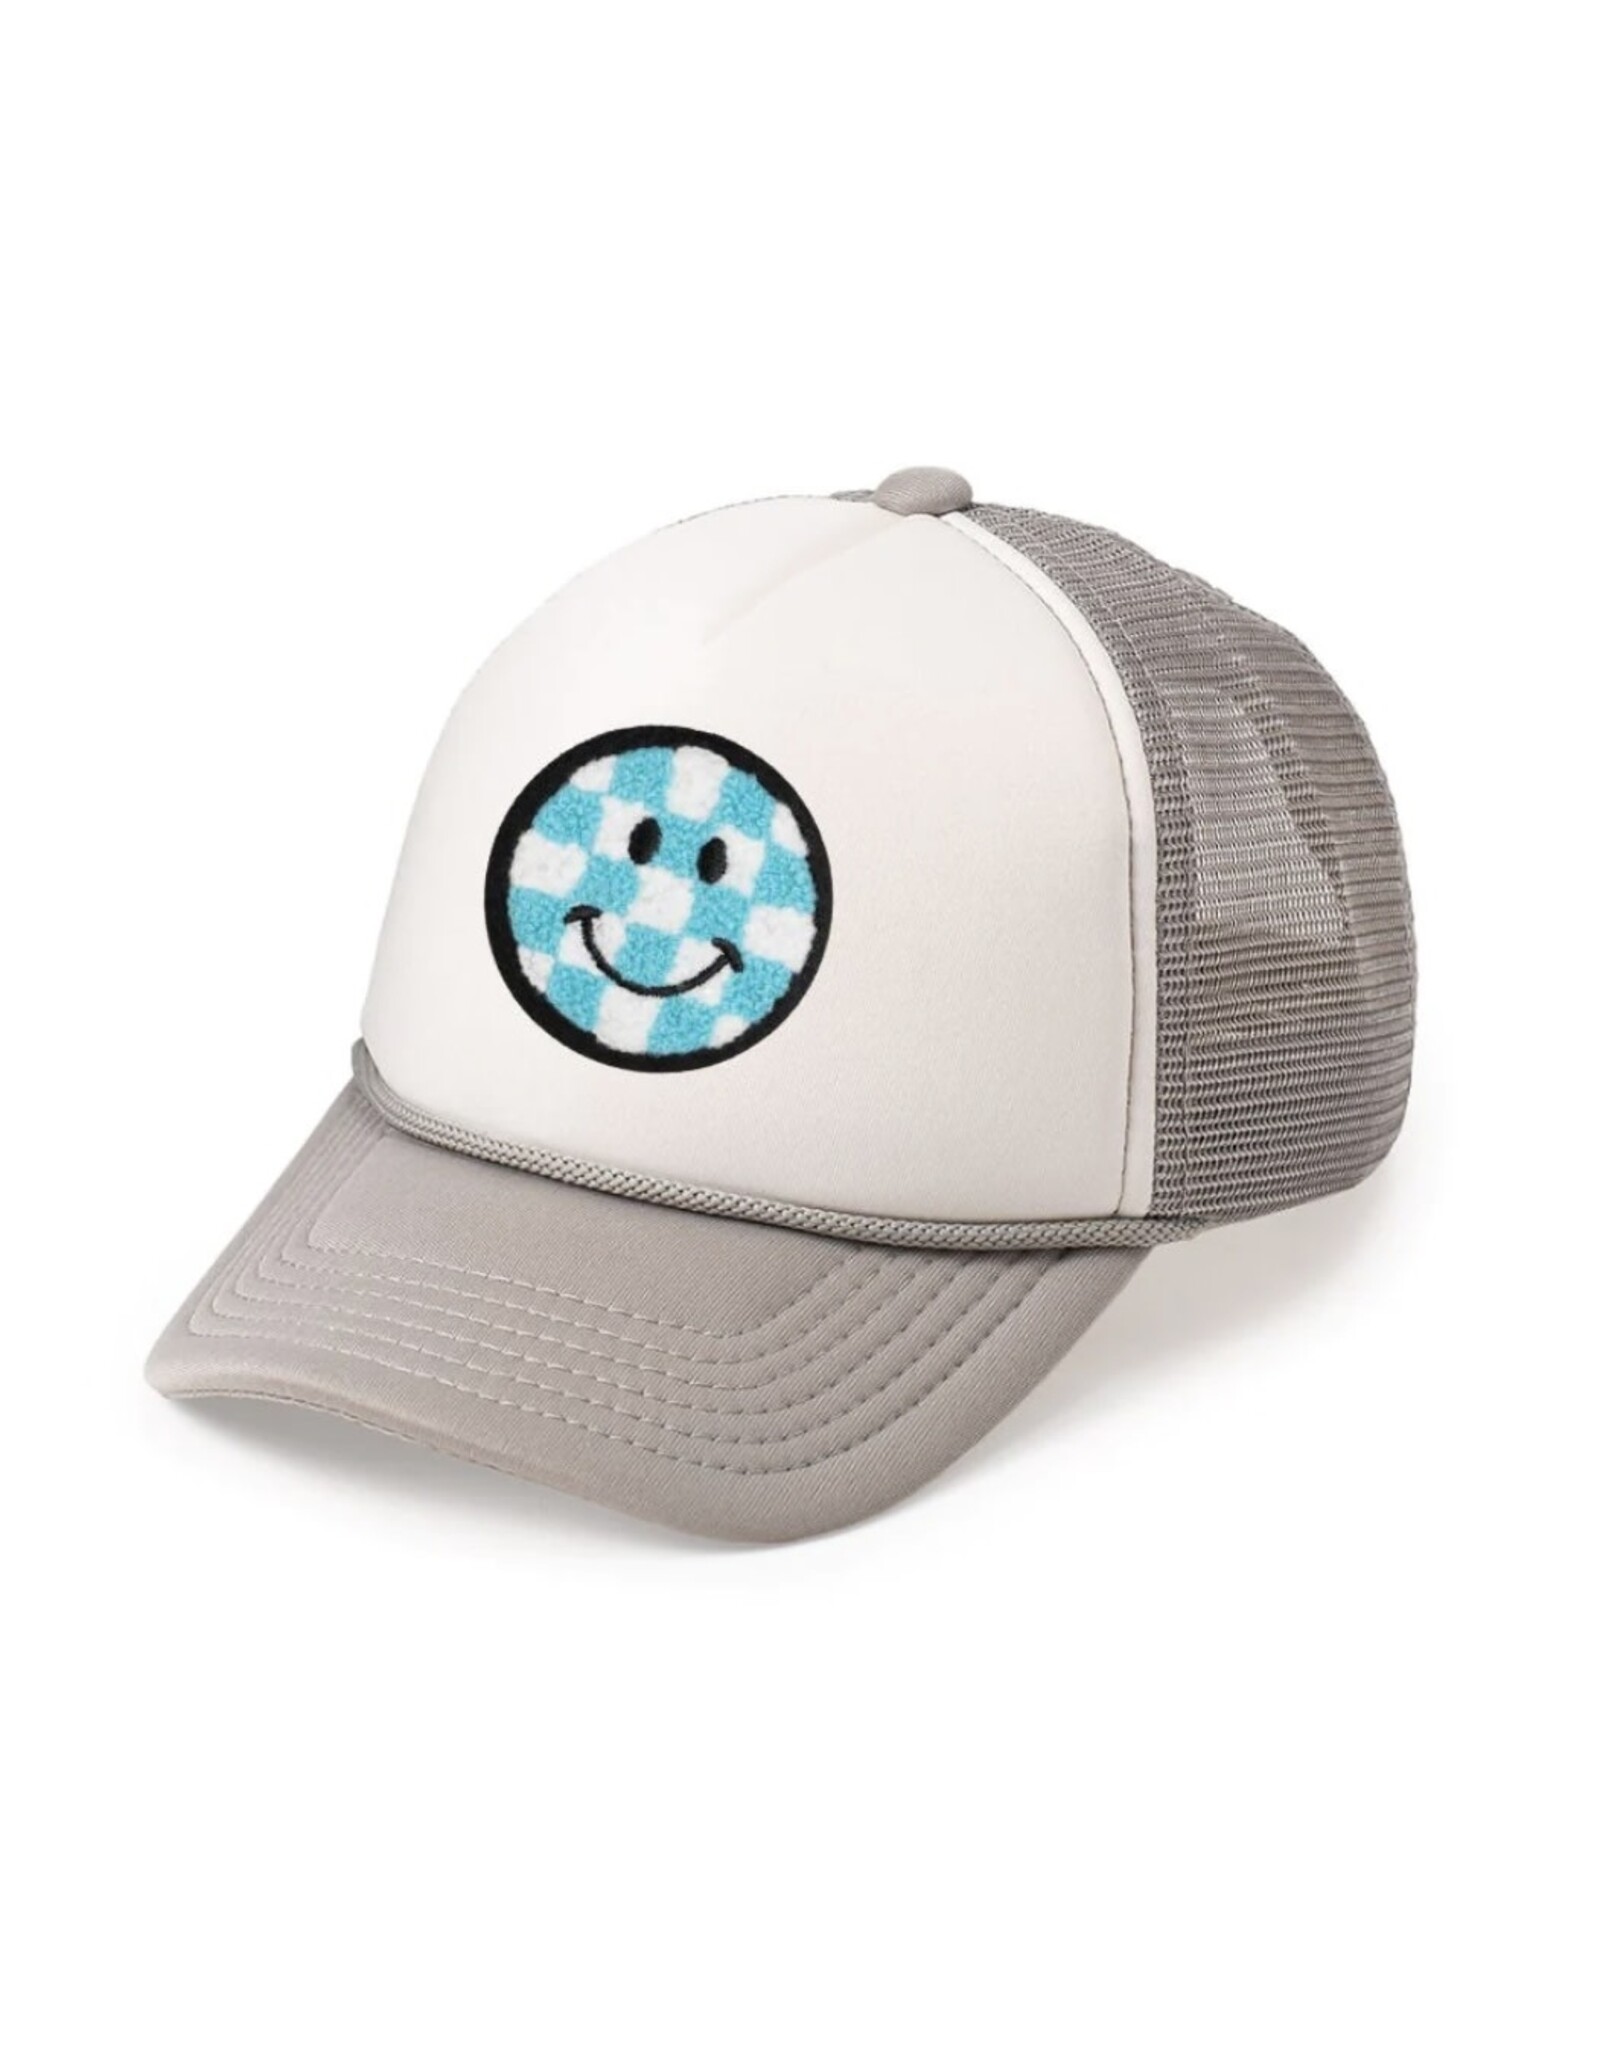 Sweet Wink- Smiley  Gray/White Trucker Hat